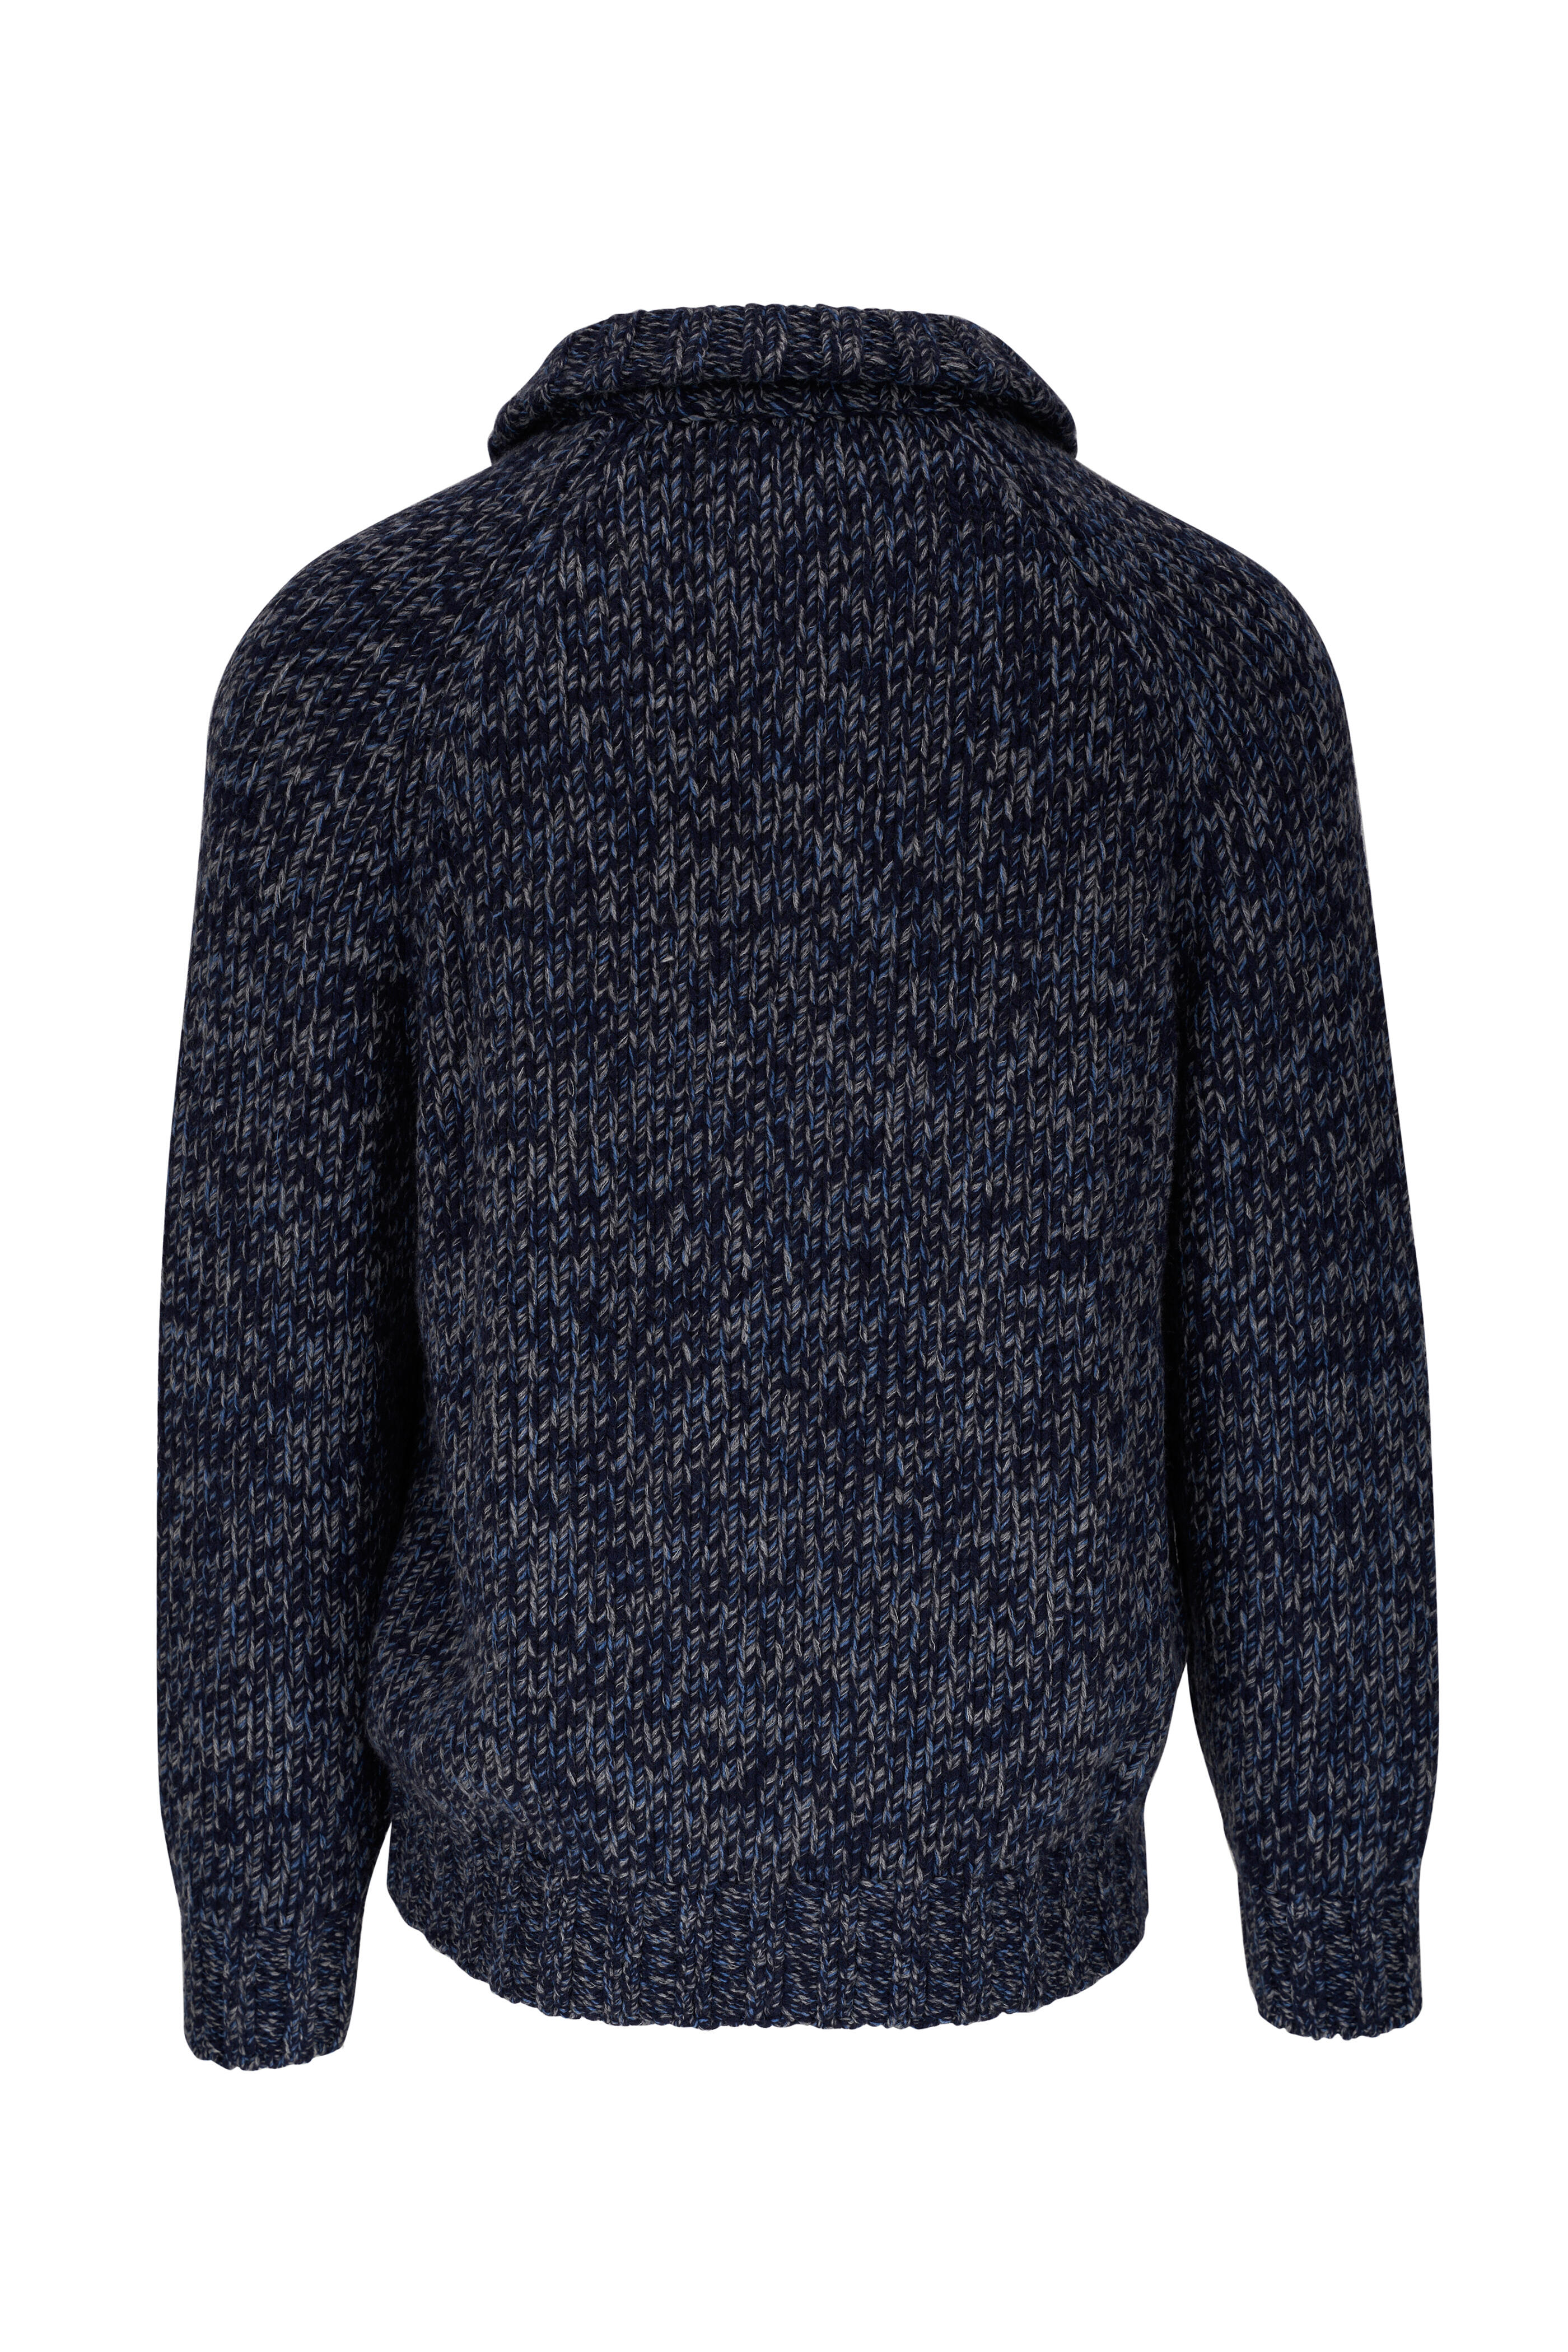 Brunello Cucinelli - Navy Mélange Chunky Knit Full Zip Sweater